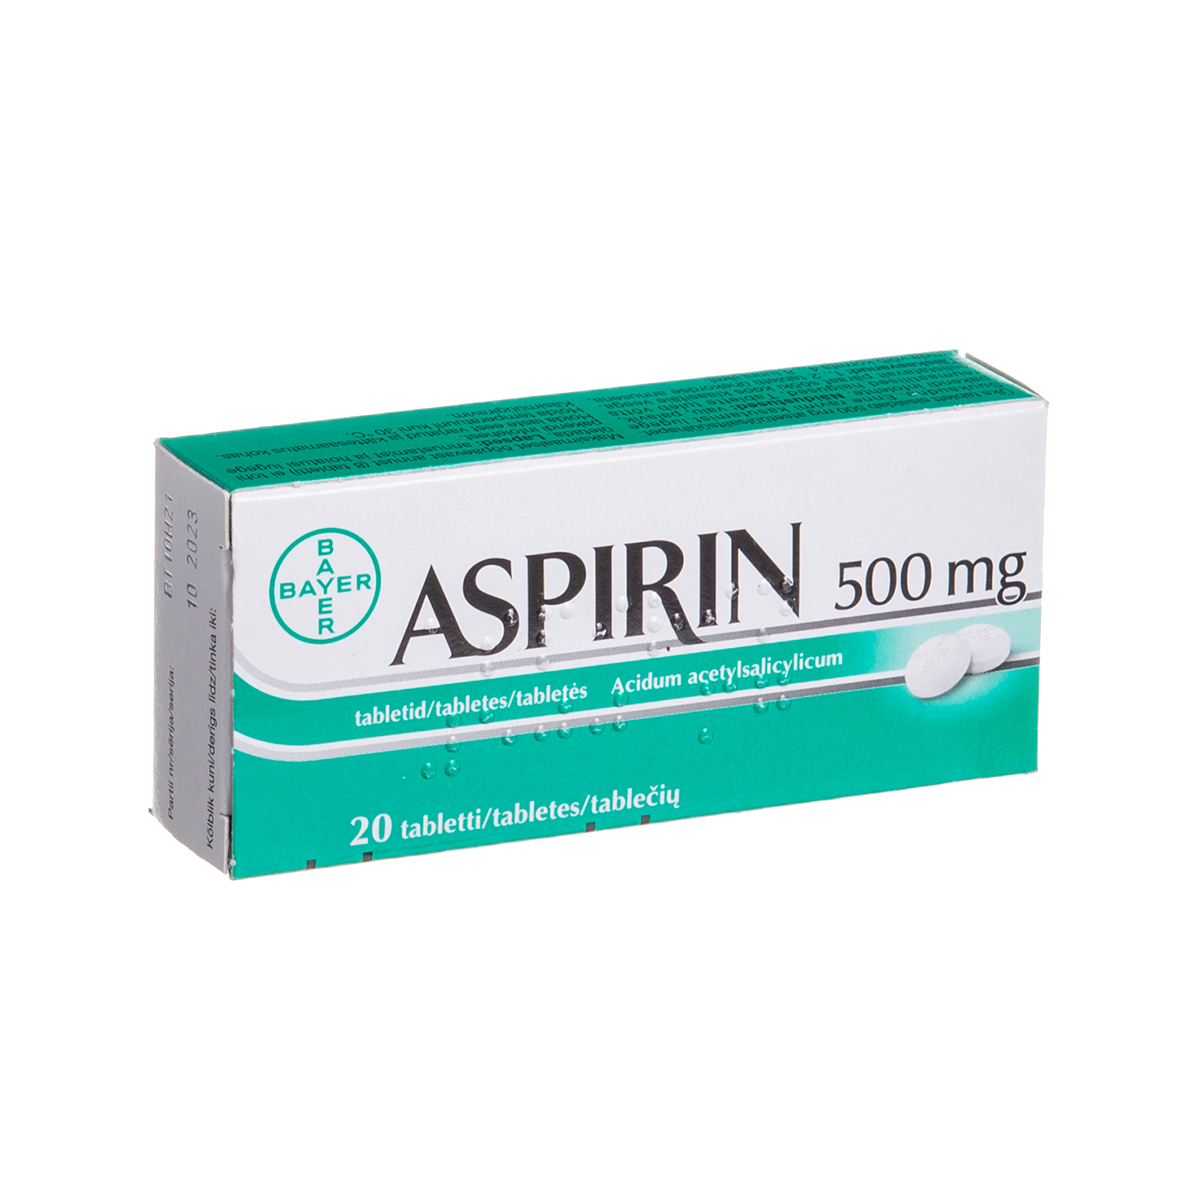 Аспирин после 60. Aspirin 500мг. Аспирин Bayer 500 мг. Аспирин Байер 500мг Турция. Aspirin 500 мг турецкий.